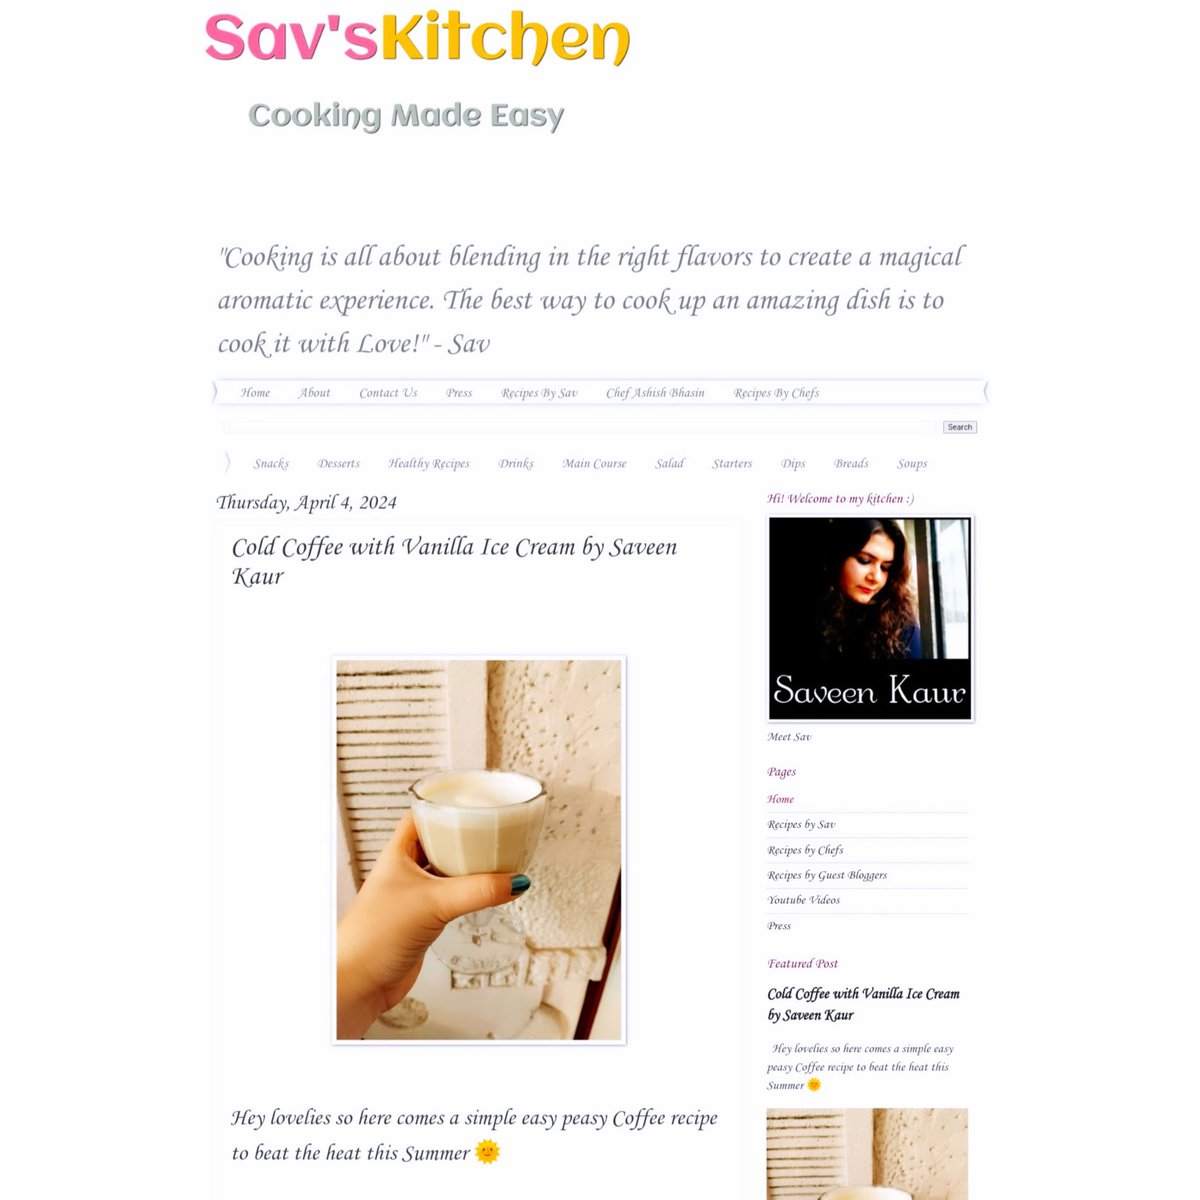 Sav's Kitchen: Cold Coffee with Vanilla Ice Cream by Saveen Kaur

#NewRecipeAlert #coldcoffee

savskitchen.com/2024/04/cold-c…